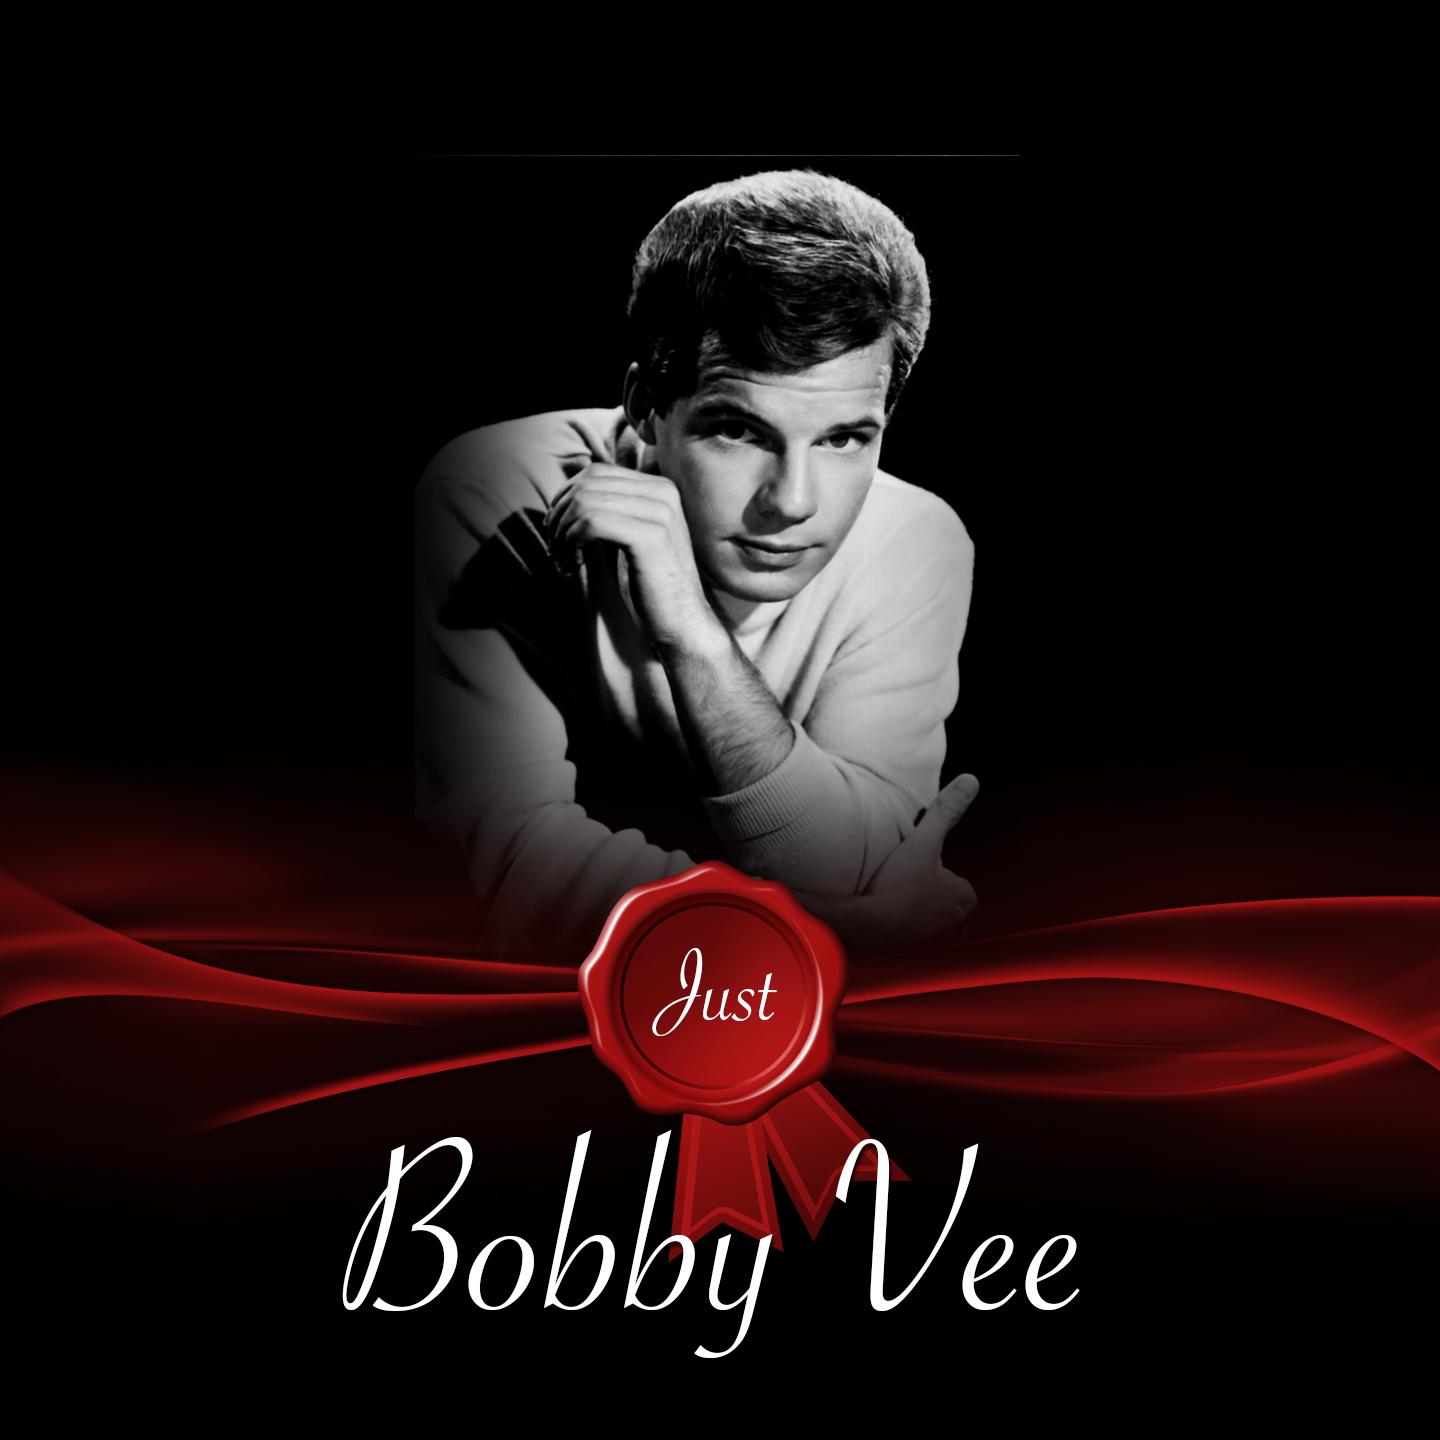 Just - Bobby Vee